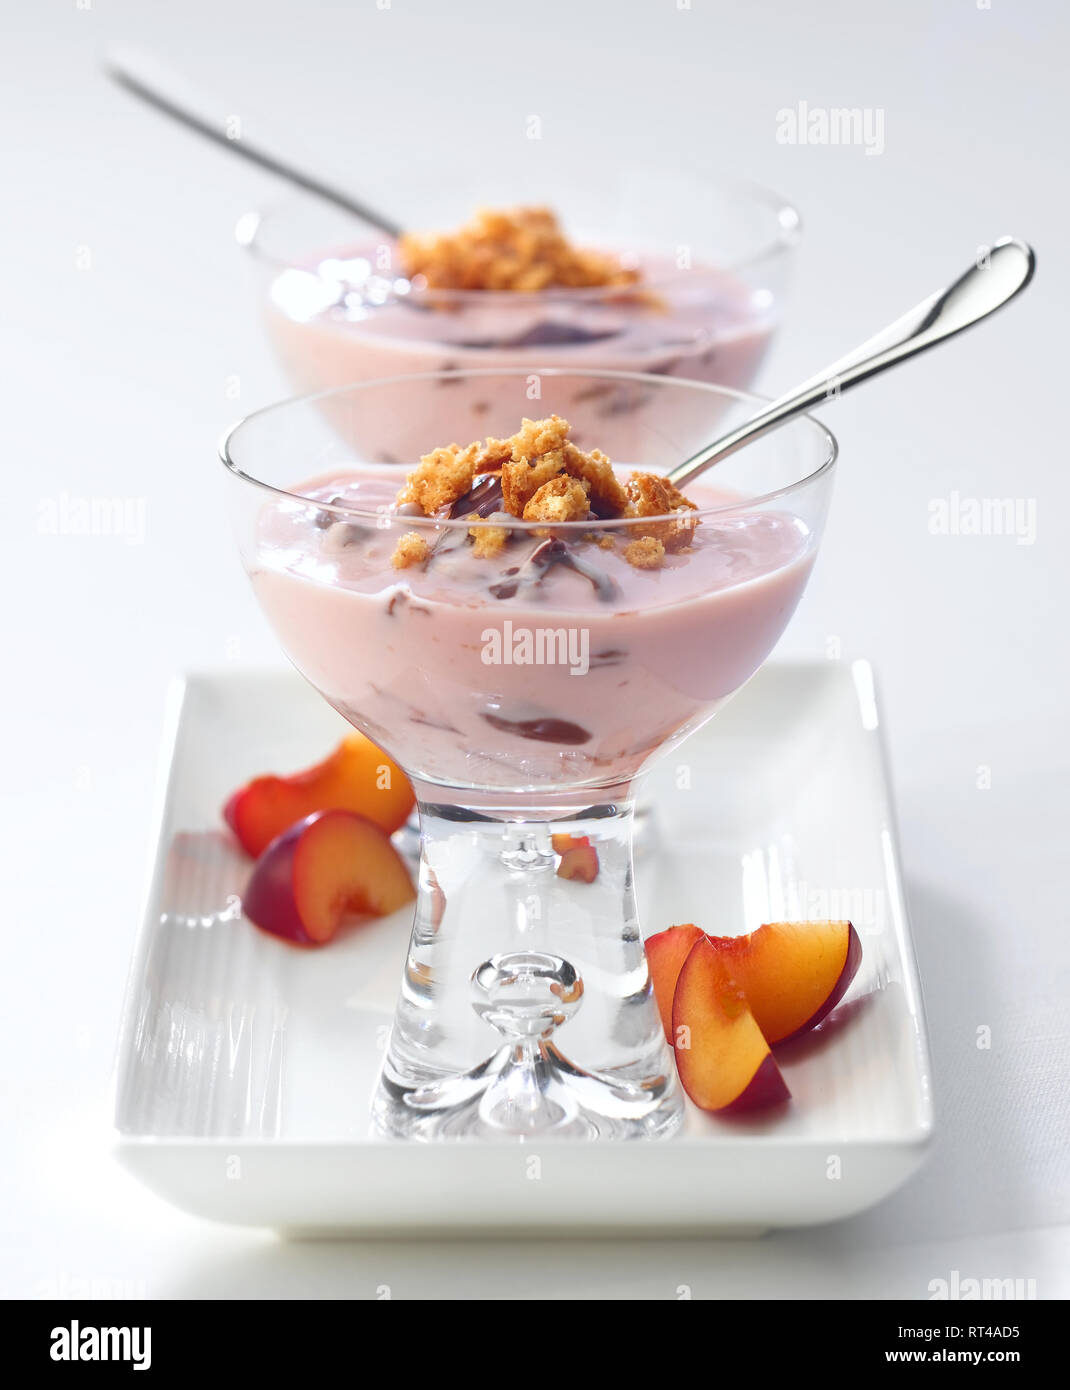 plum and chocolate dessert Stock Photo